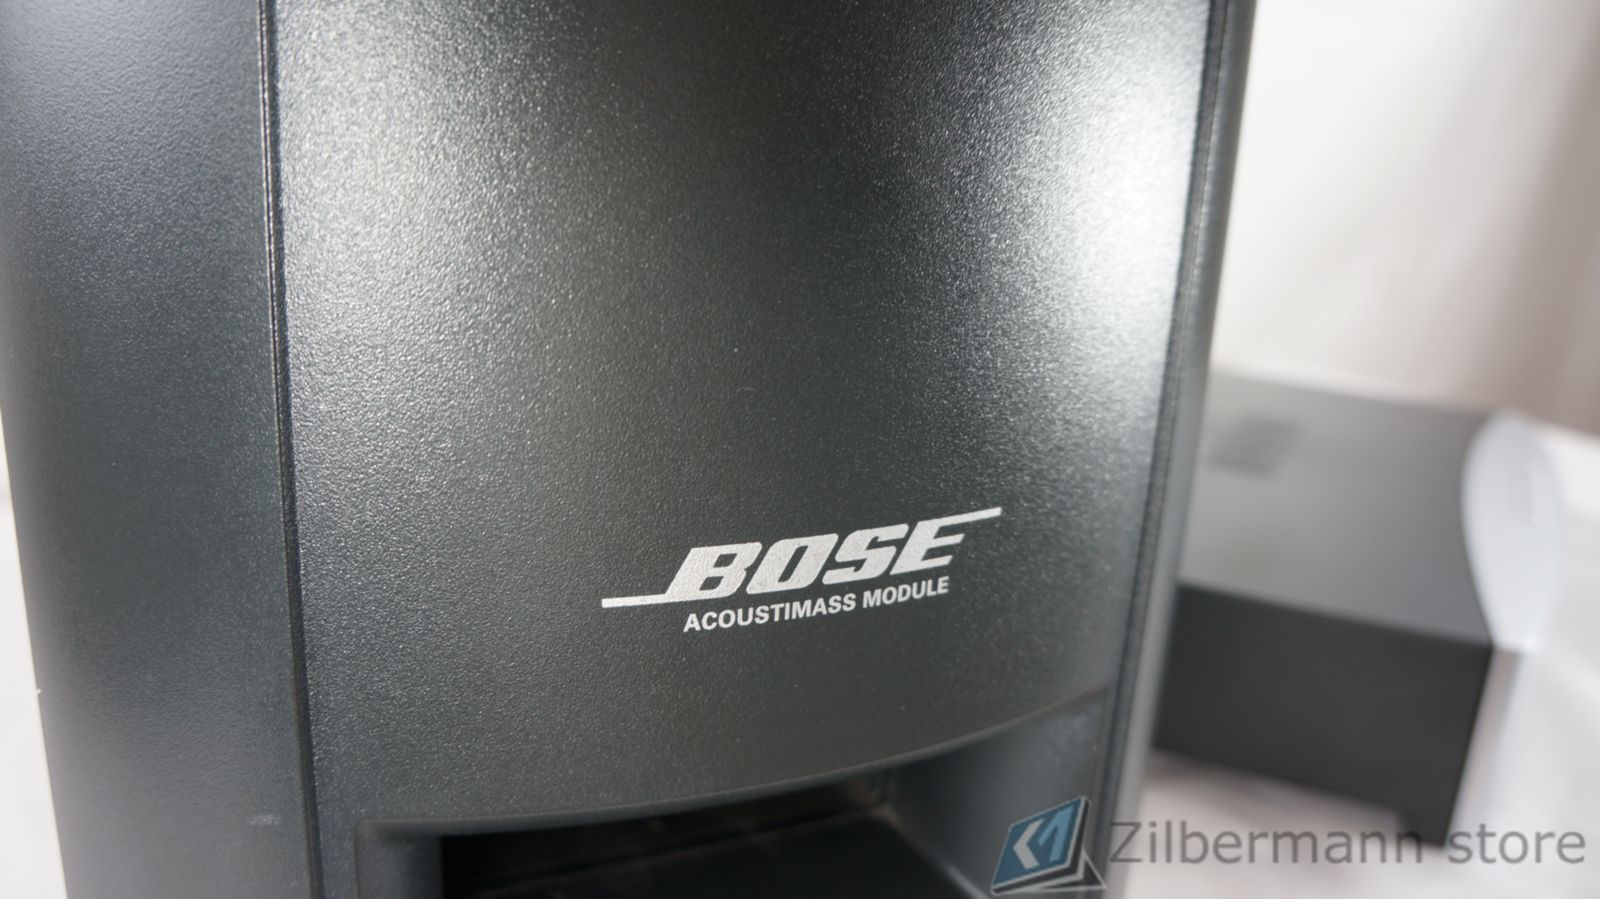 Bose_321_3-2-1_Series_III_GS_Heimkino-system_mit_HDMI_06